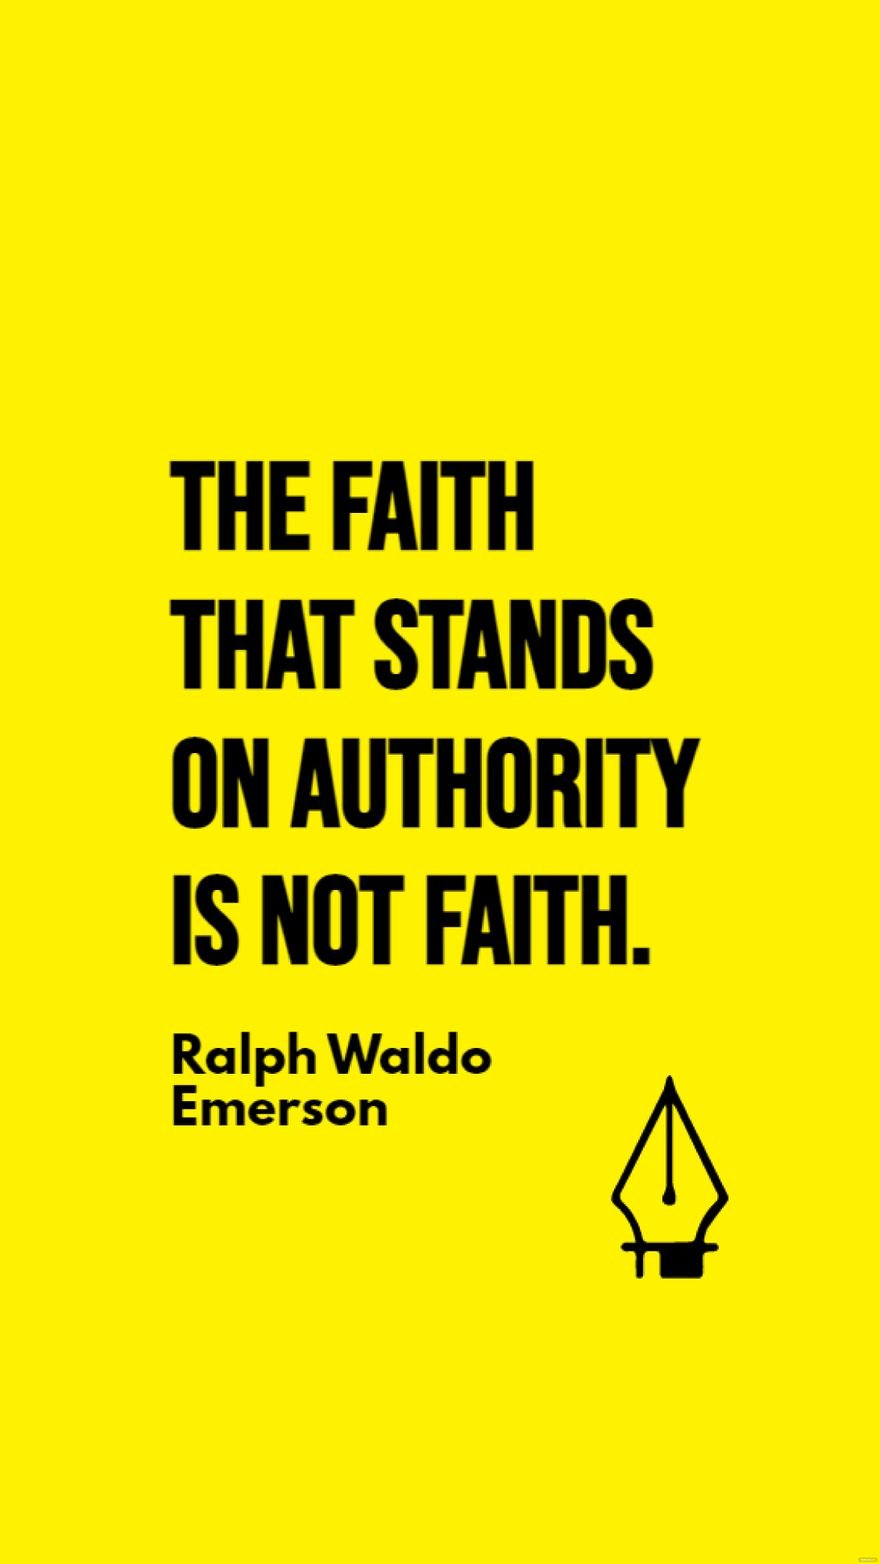 Ralph Waldo Emerson - The faith that stands on authority is not faith.